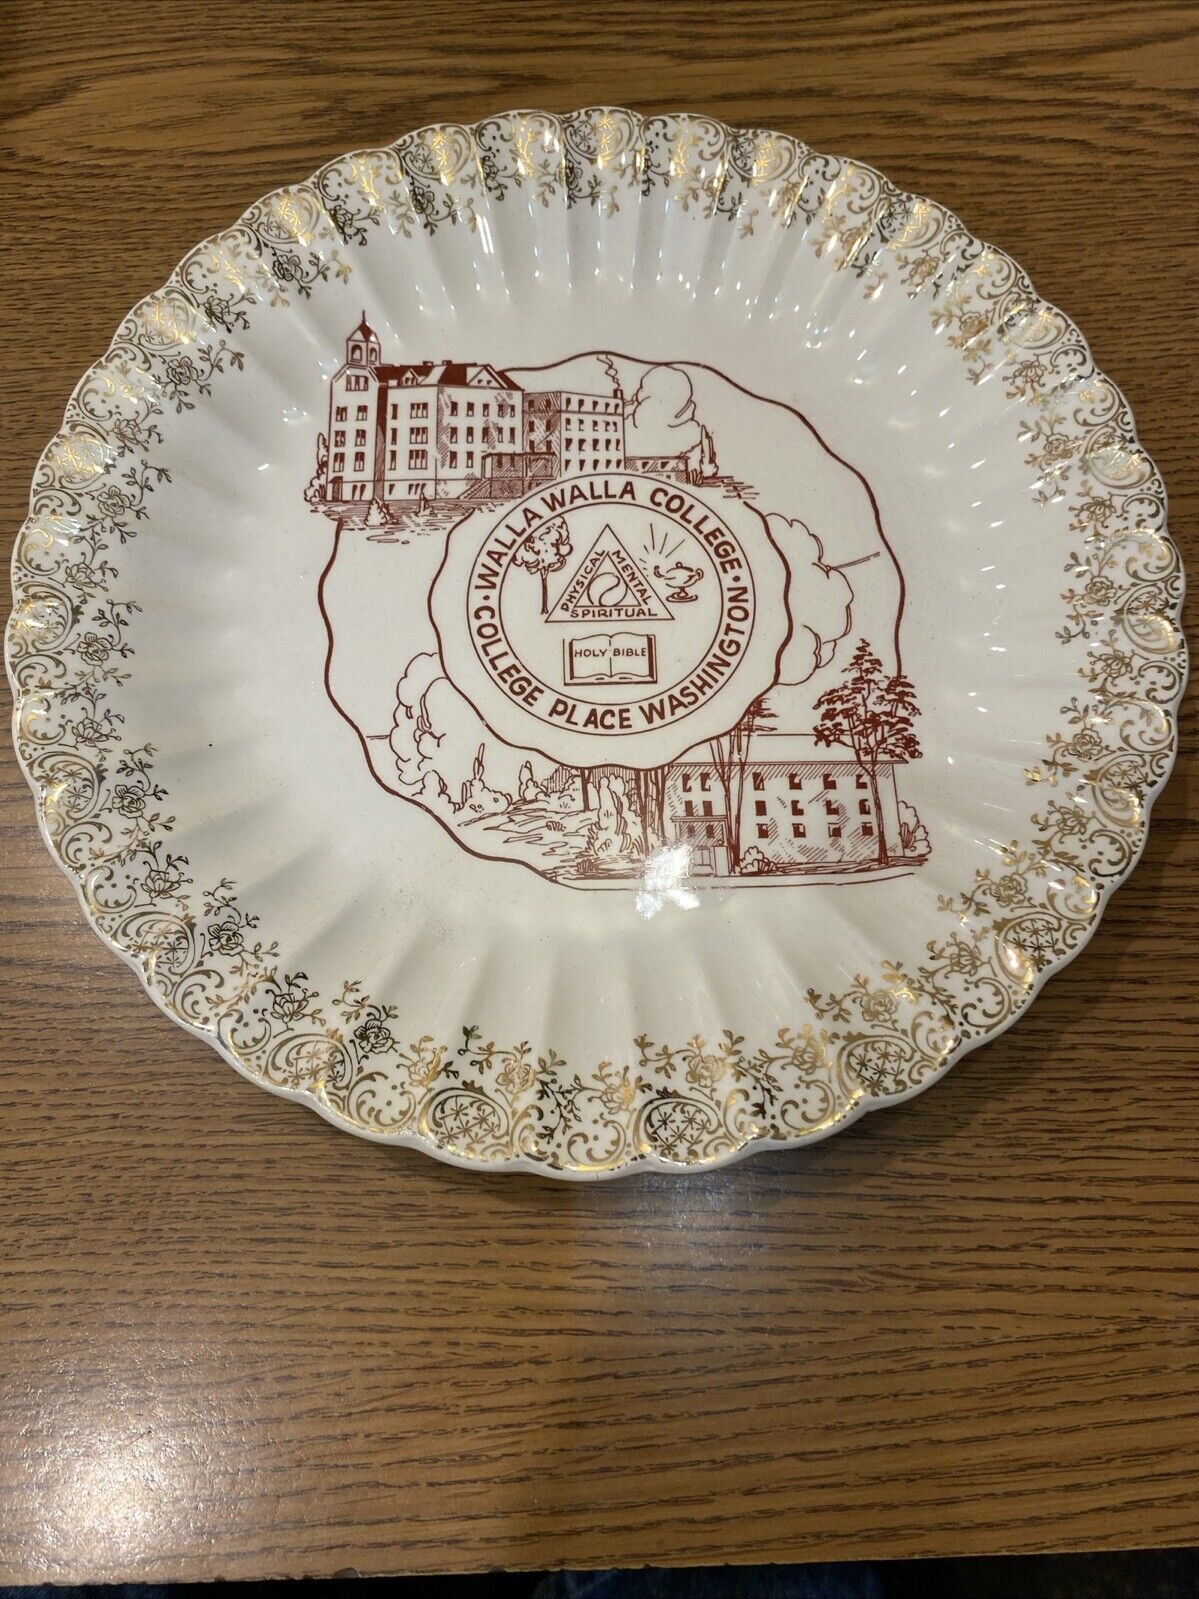 Vintage Walla Walla College Souvenir Collectable Plate/ College Place Washington